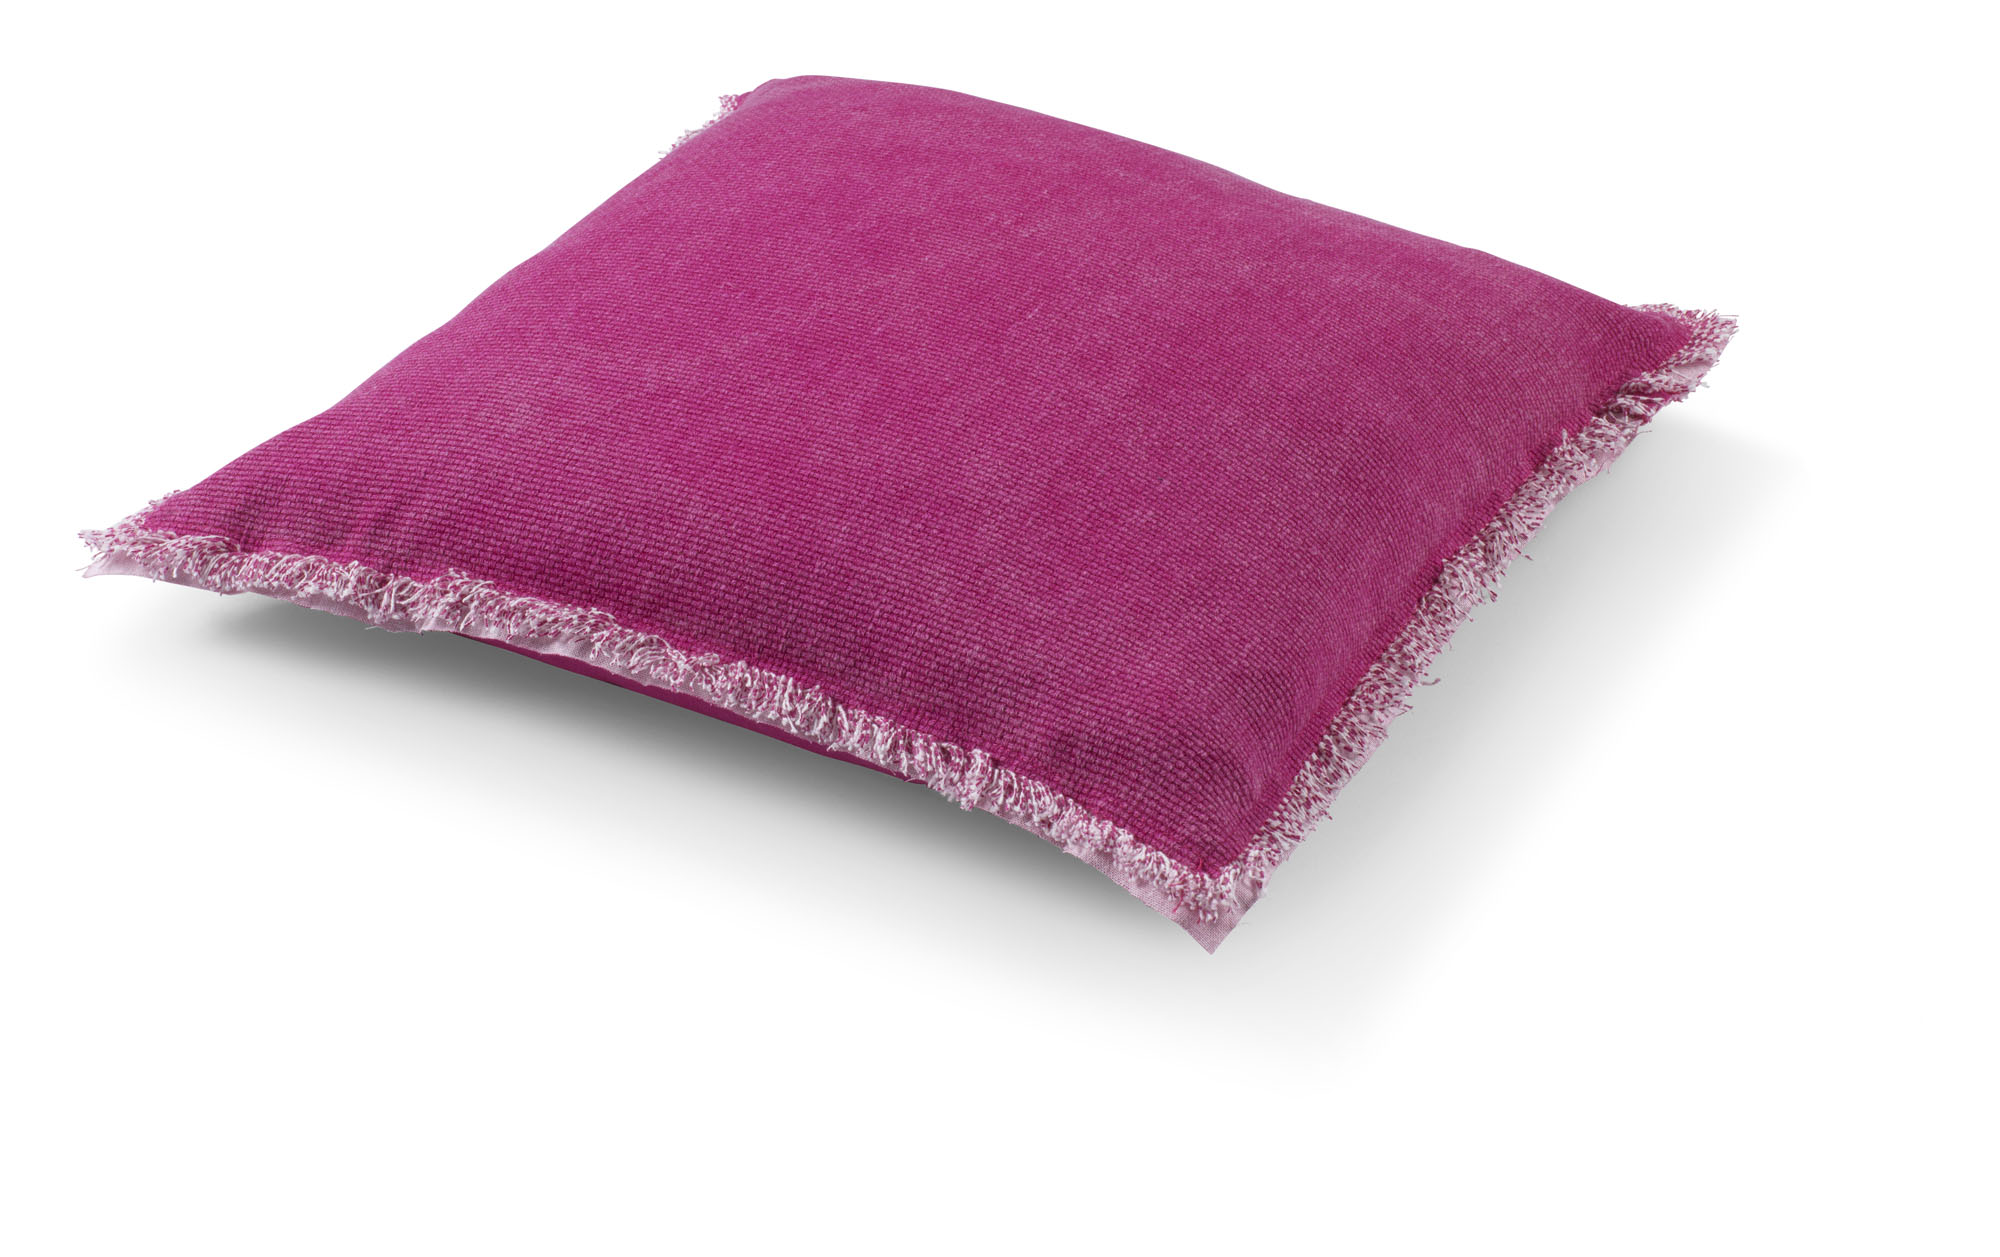 BURTO - Sierkussen XL - 70x70 cm  fuchsia -  roze - van gewassen katoen - lounge kussen